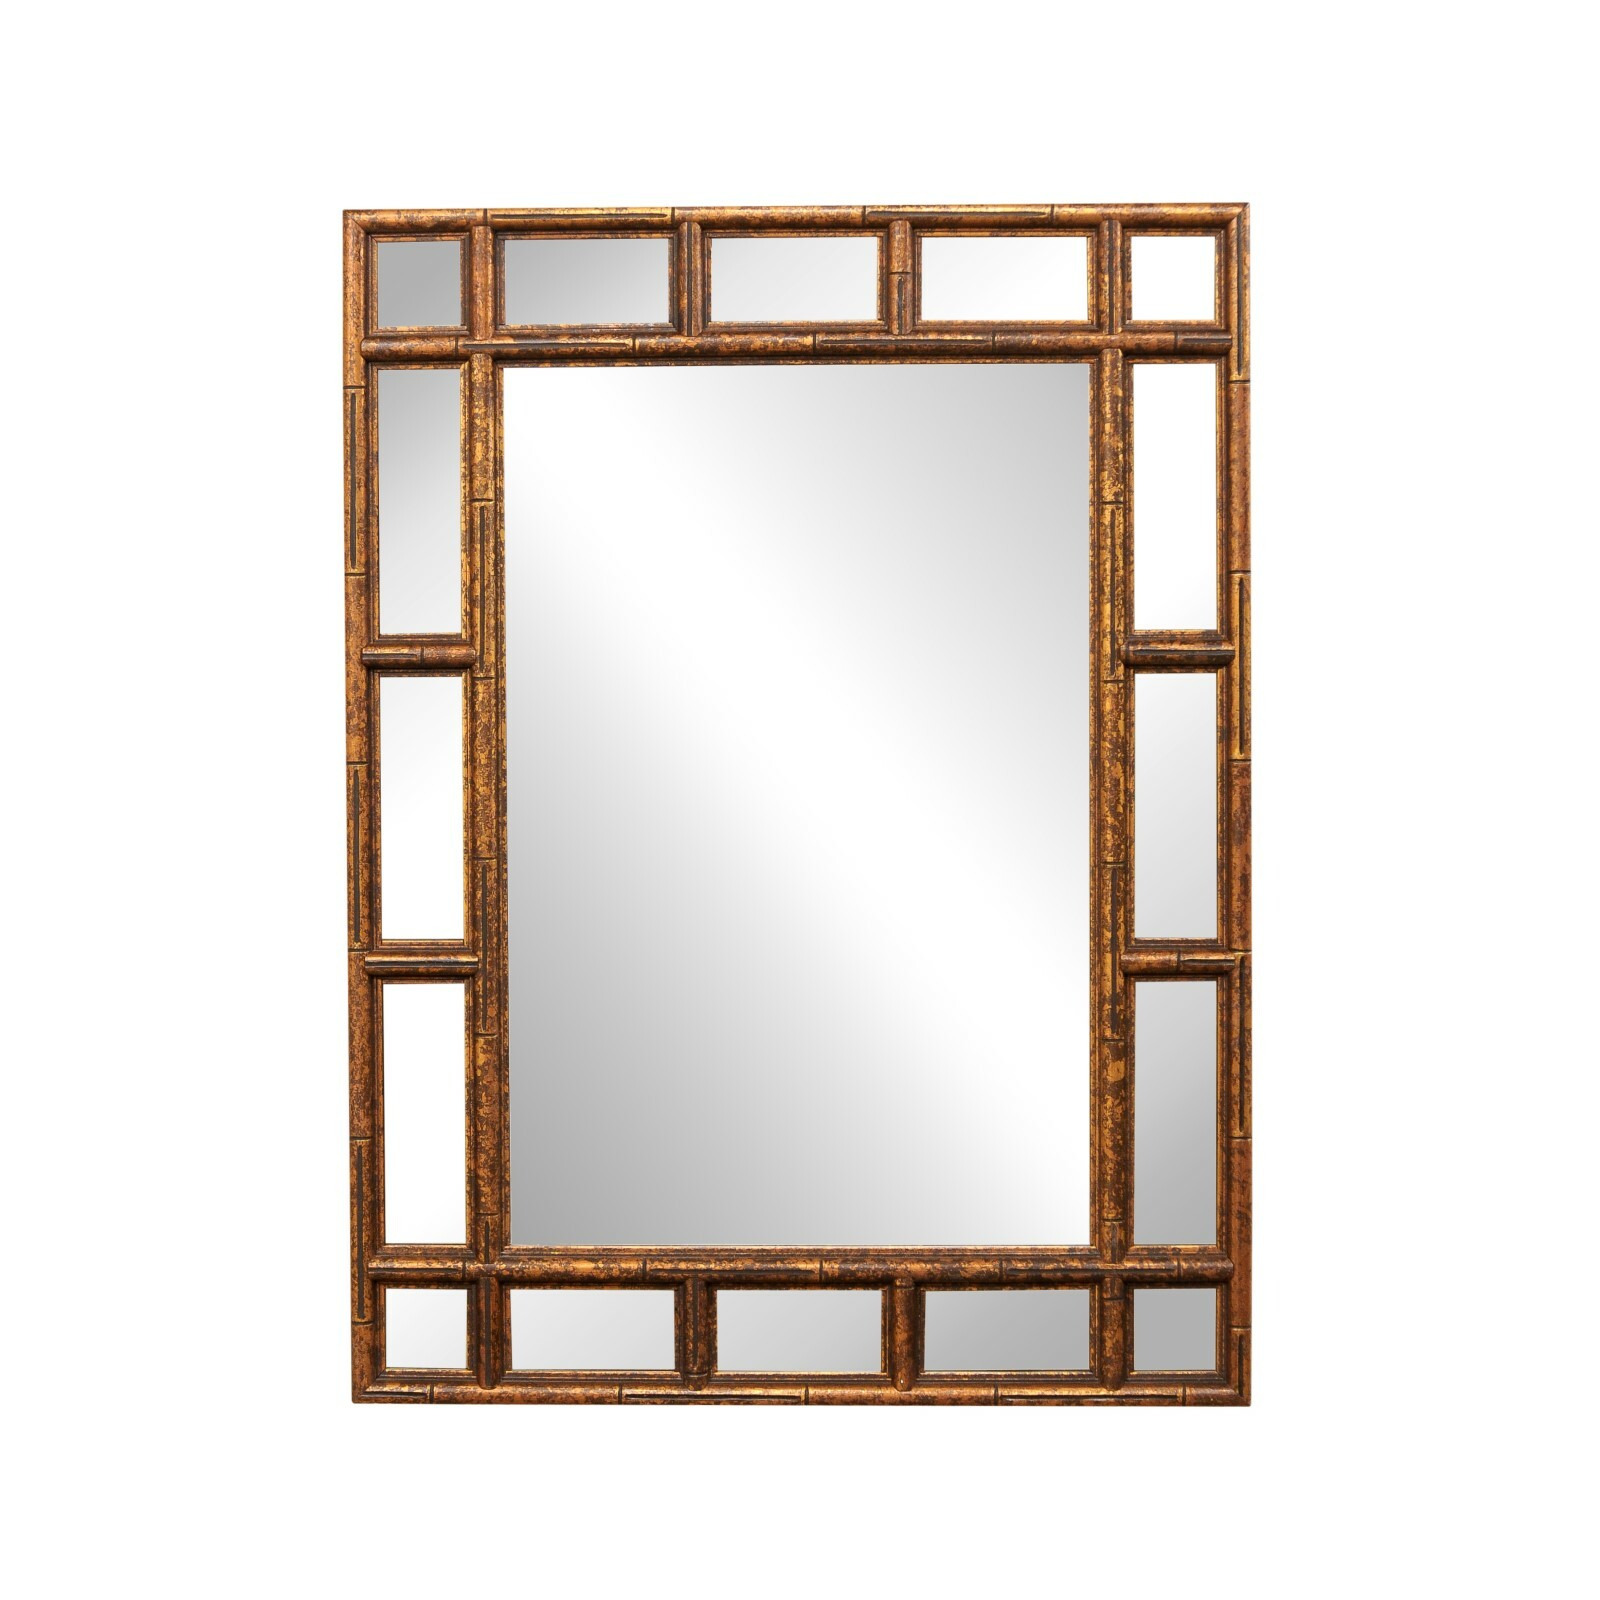 Faux Bamboo Wall Mirror, Rectangular-Shaped